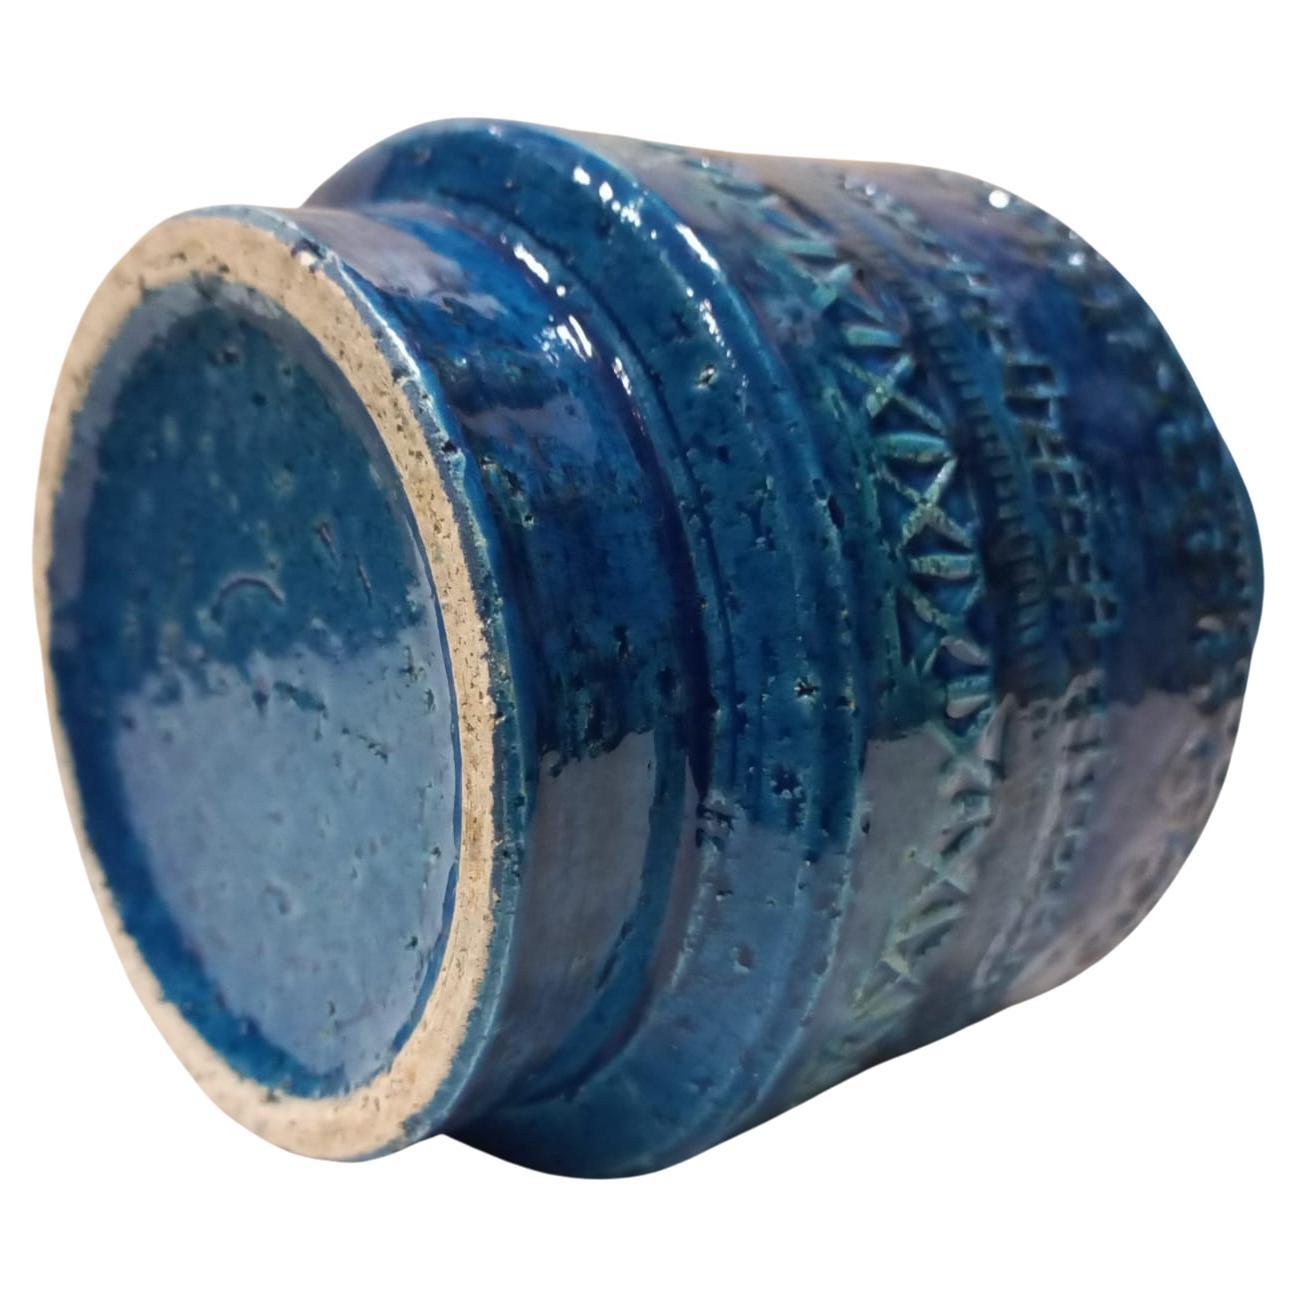 Aldo Londi Circular Ceramic Vase, Blue Glazed, Bitossi, Mid 20th Century 3